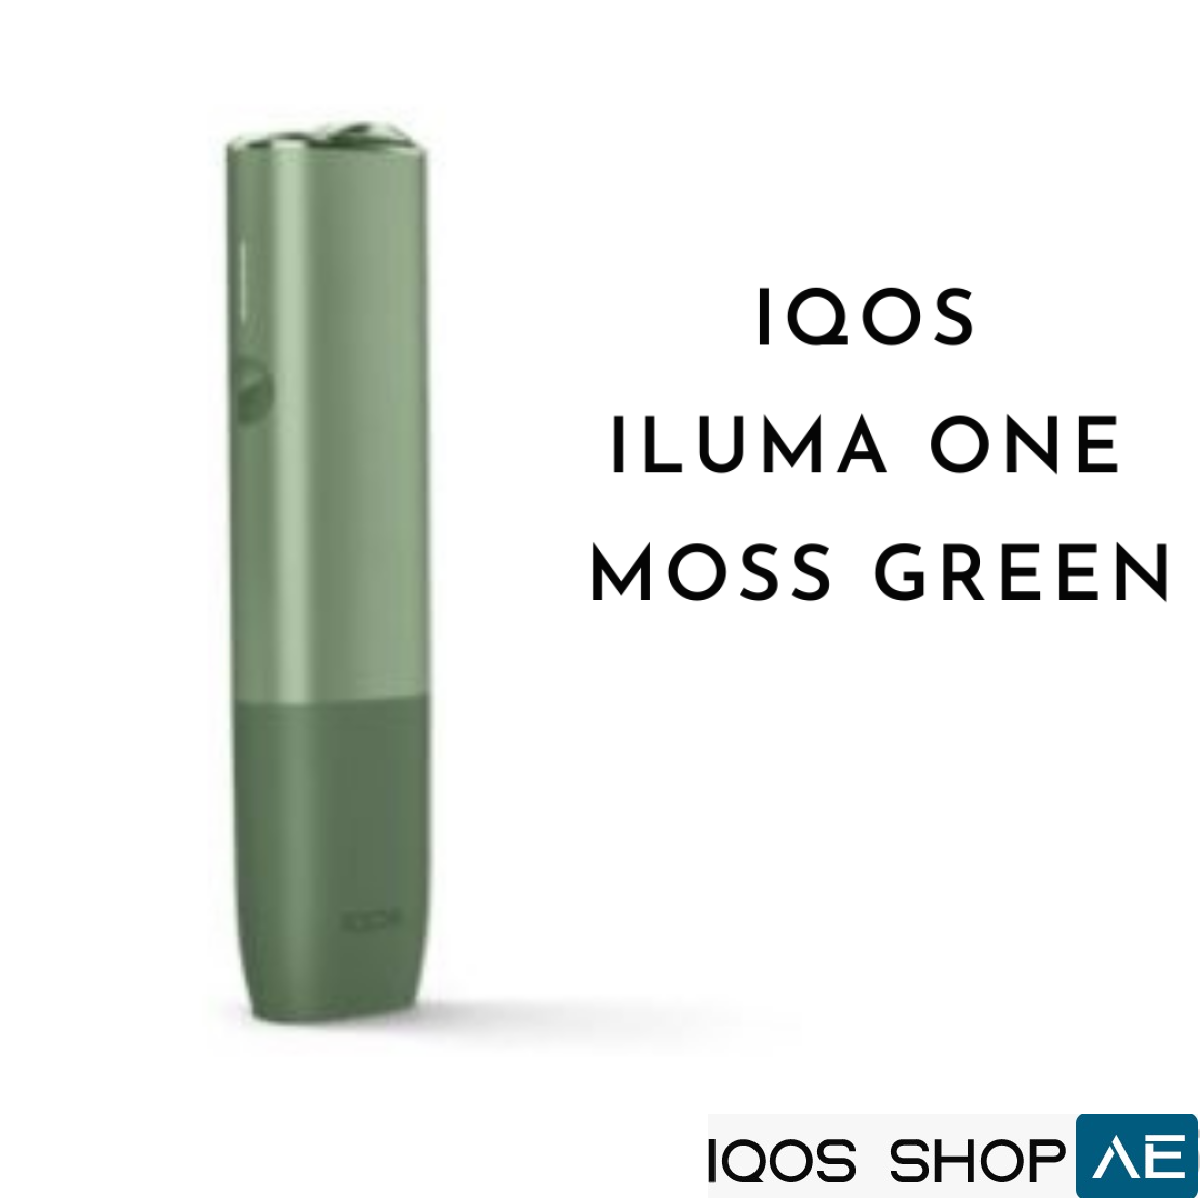 IQOS Iluma One - Review 